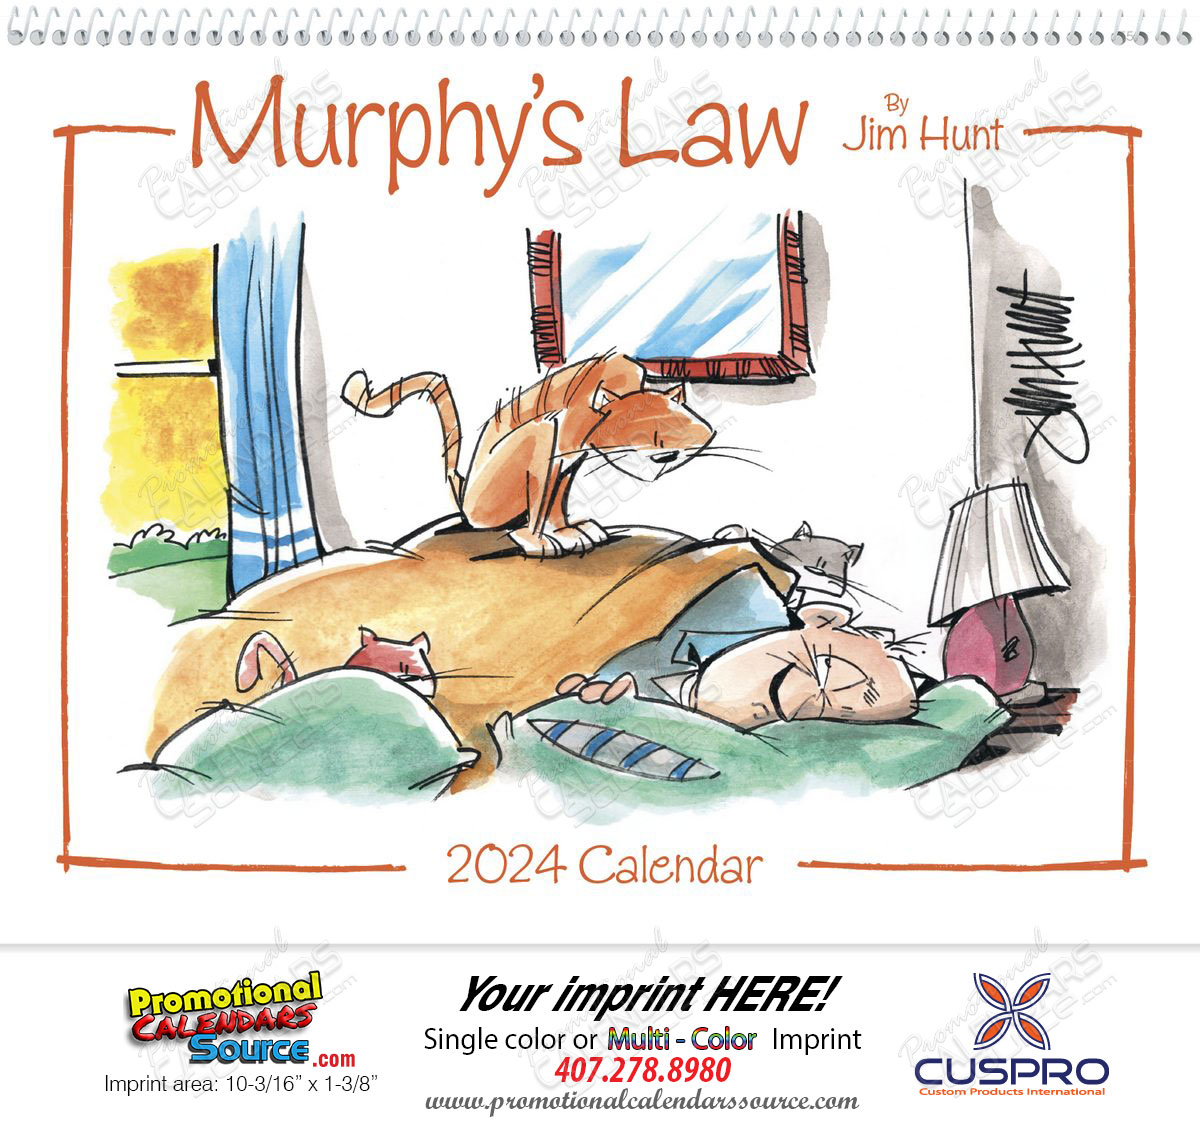 Murphys Law Promotional Calendar 